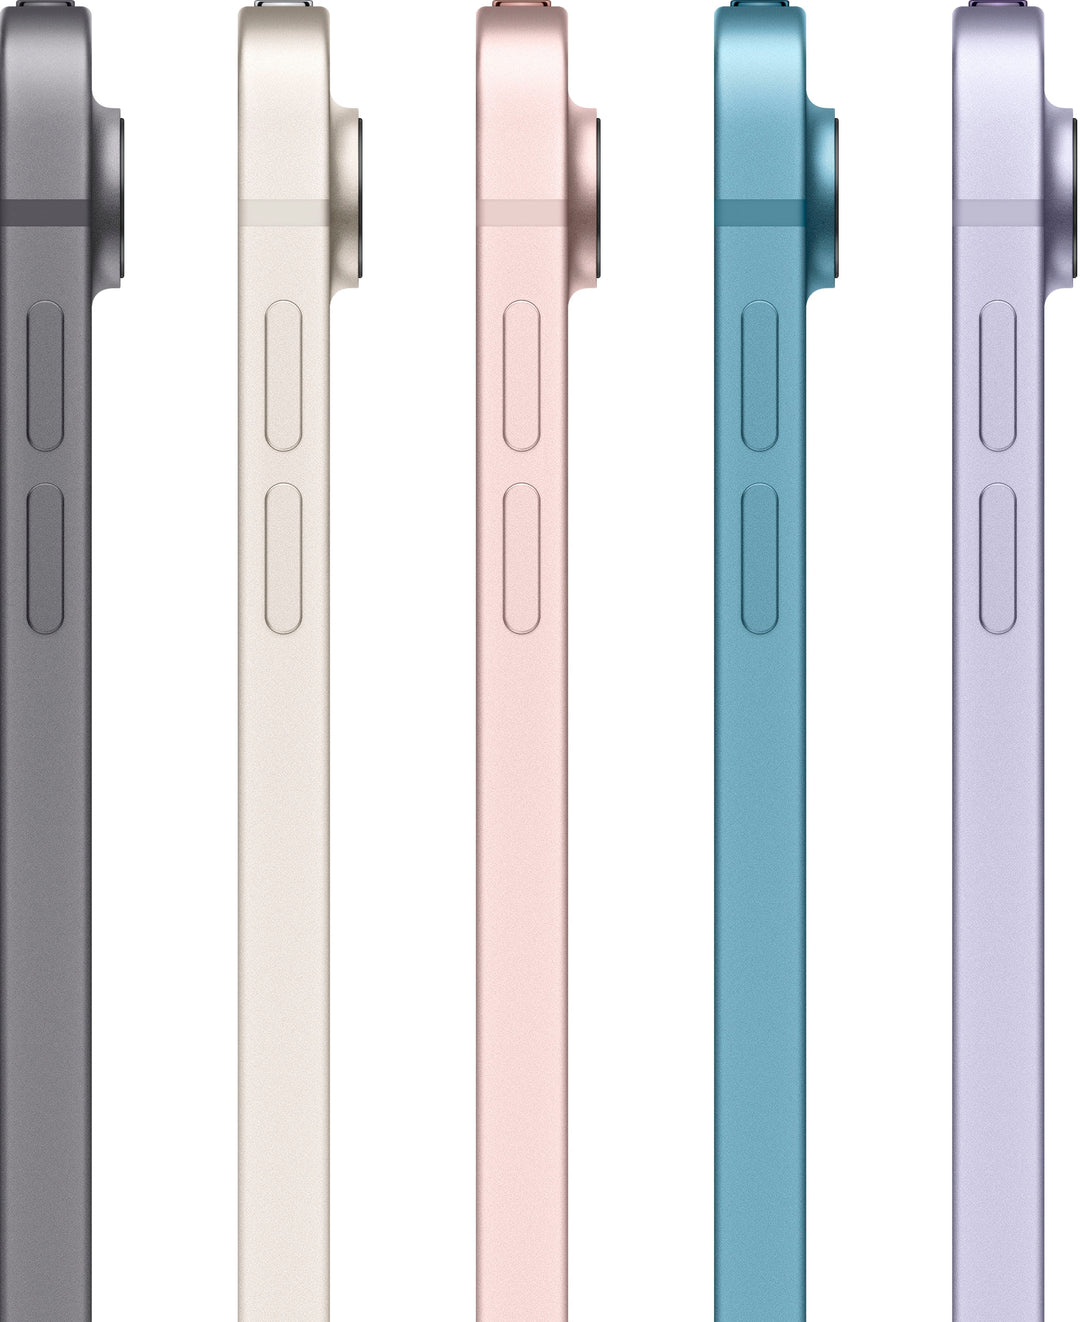 Apple - 10.9-Inch iPad Air - Latest Model - (5th Generation) with Wi-Fi + Cellular - 64GB - Purple (Unlocked)_5